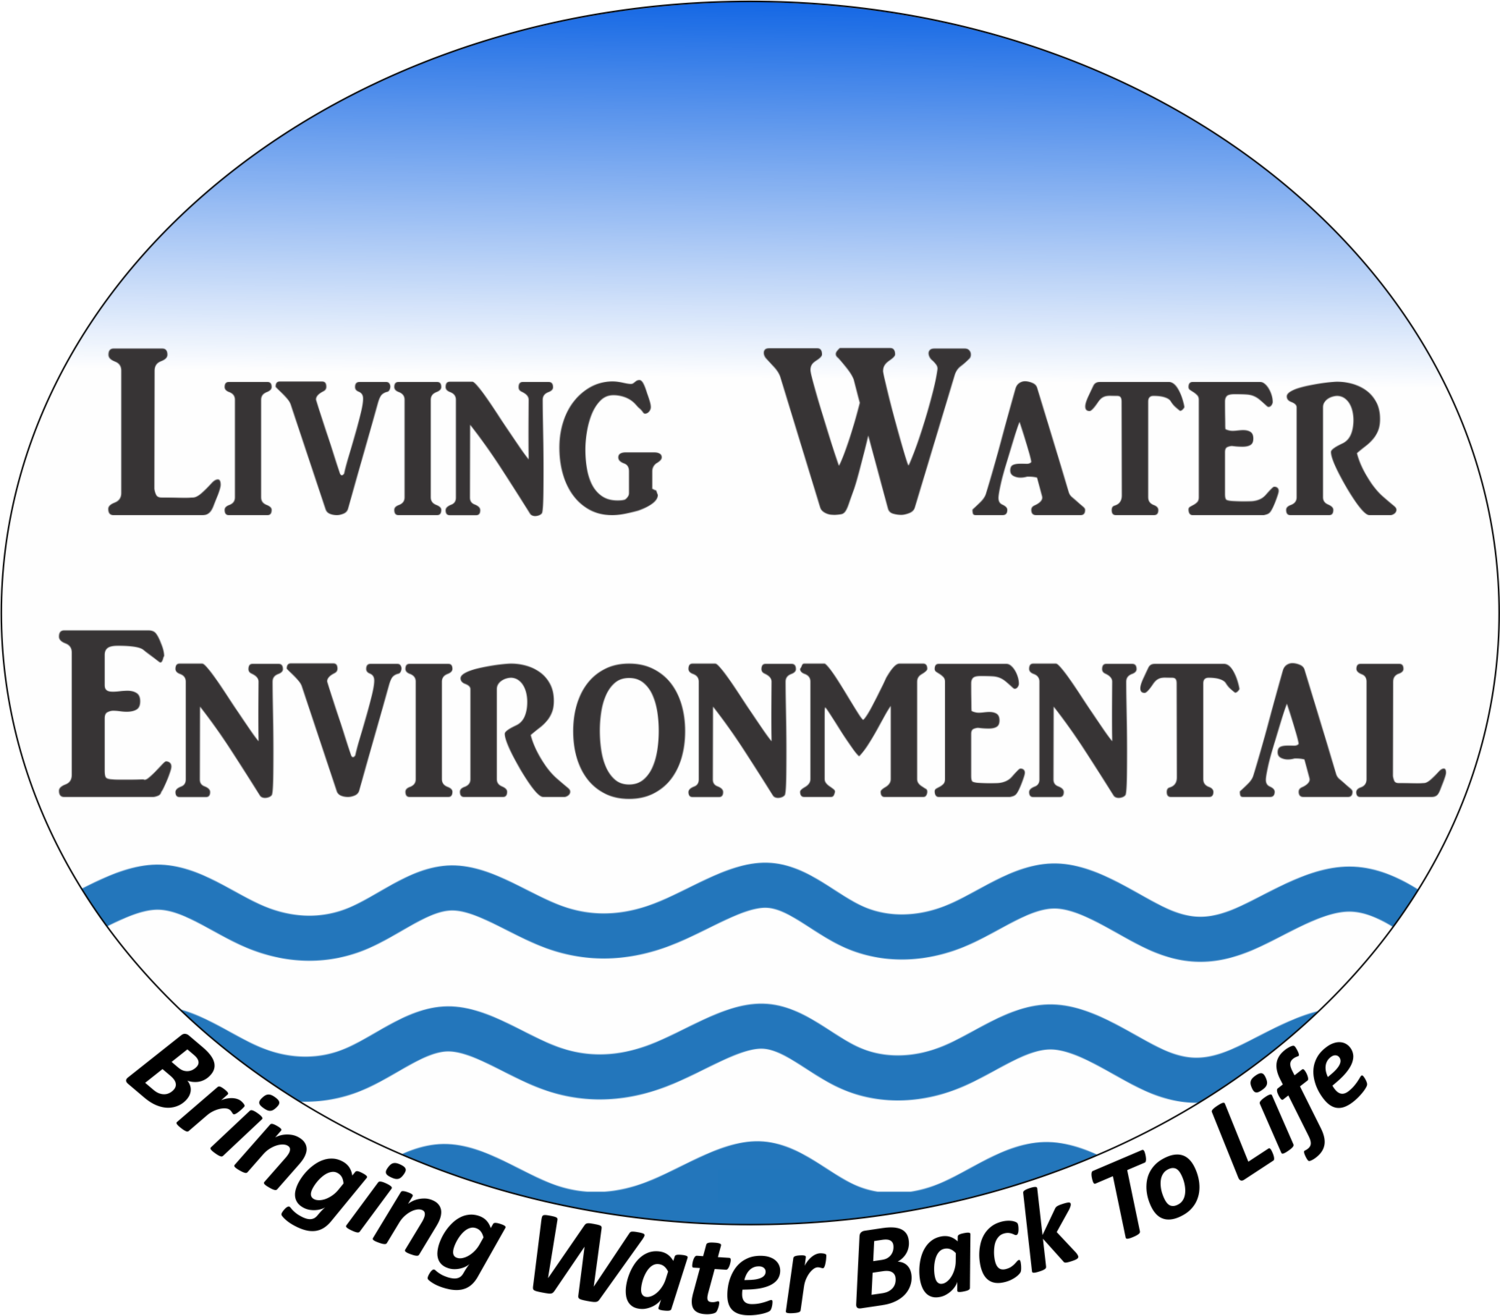 Living Water Environmental: Revolutionizing Wash Water Treatment